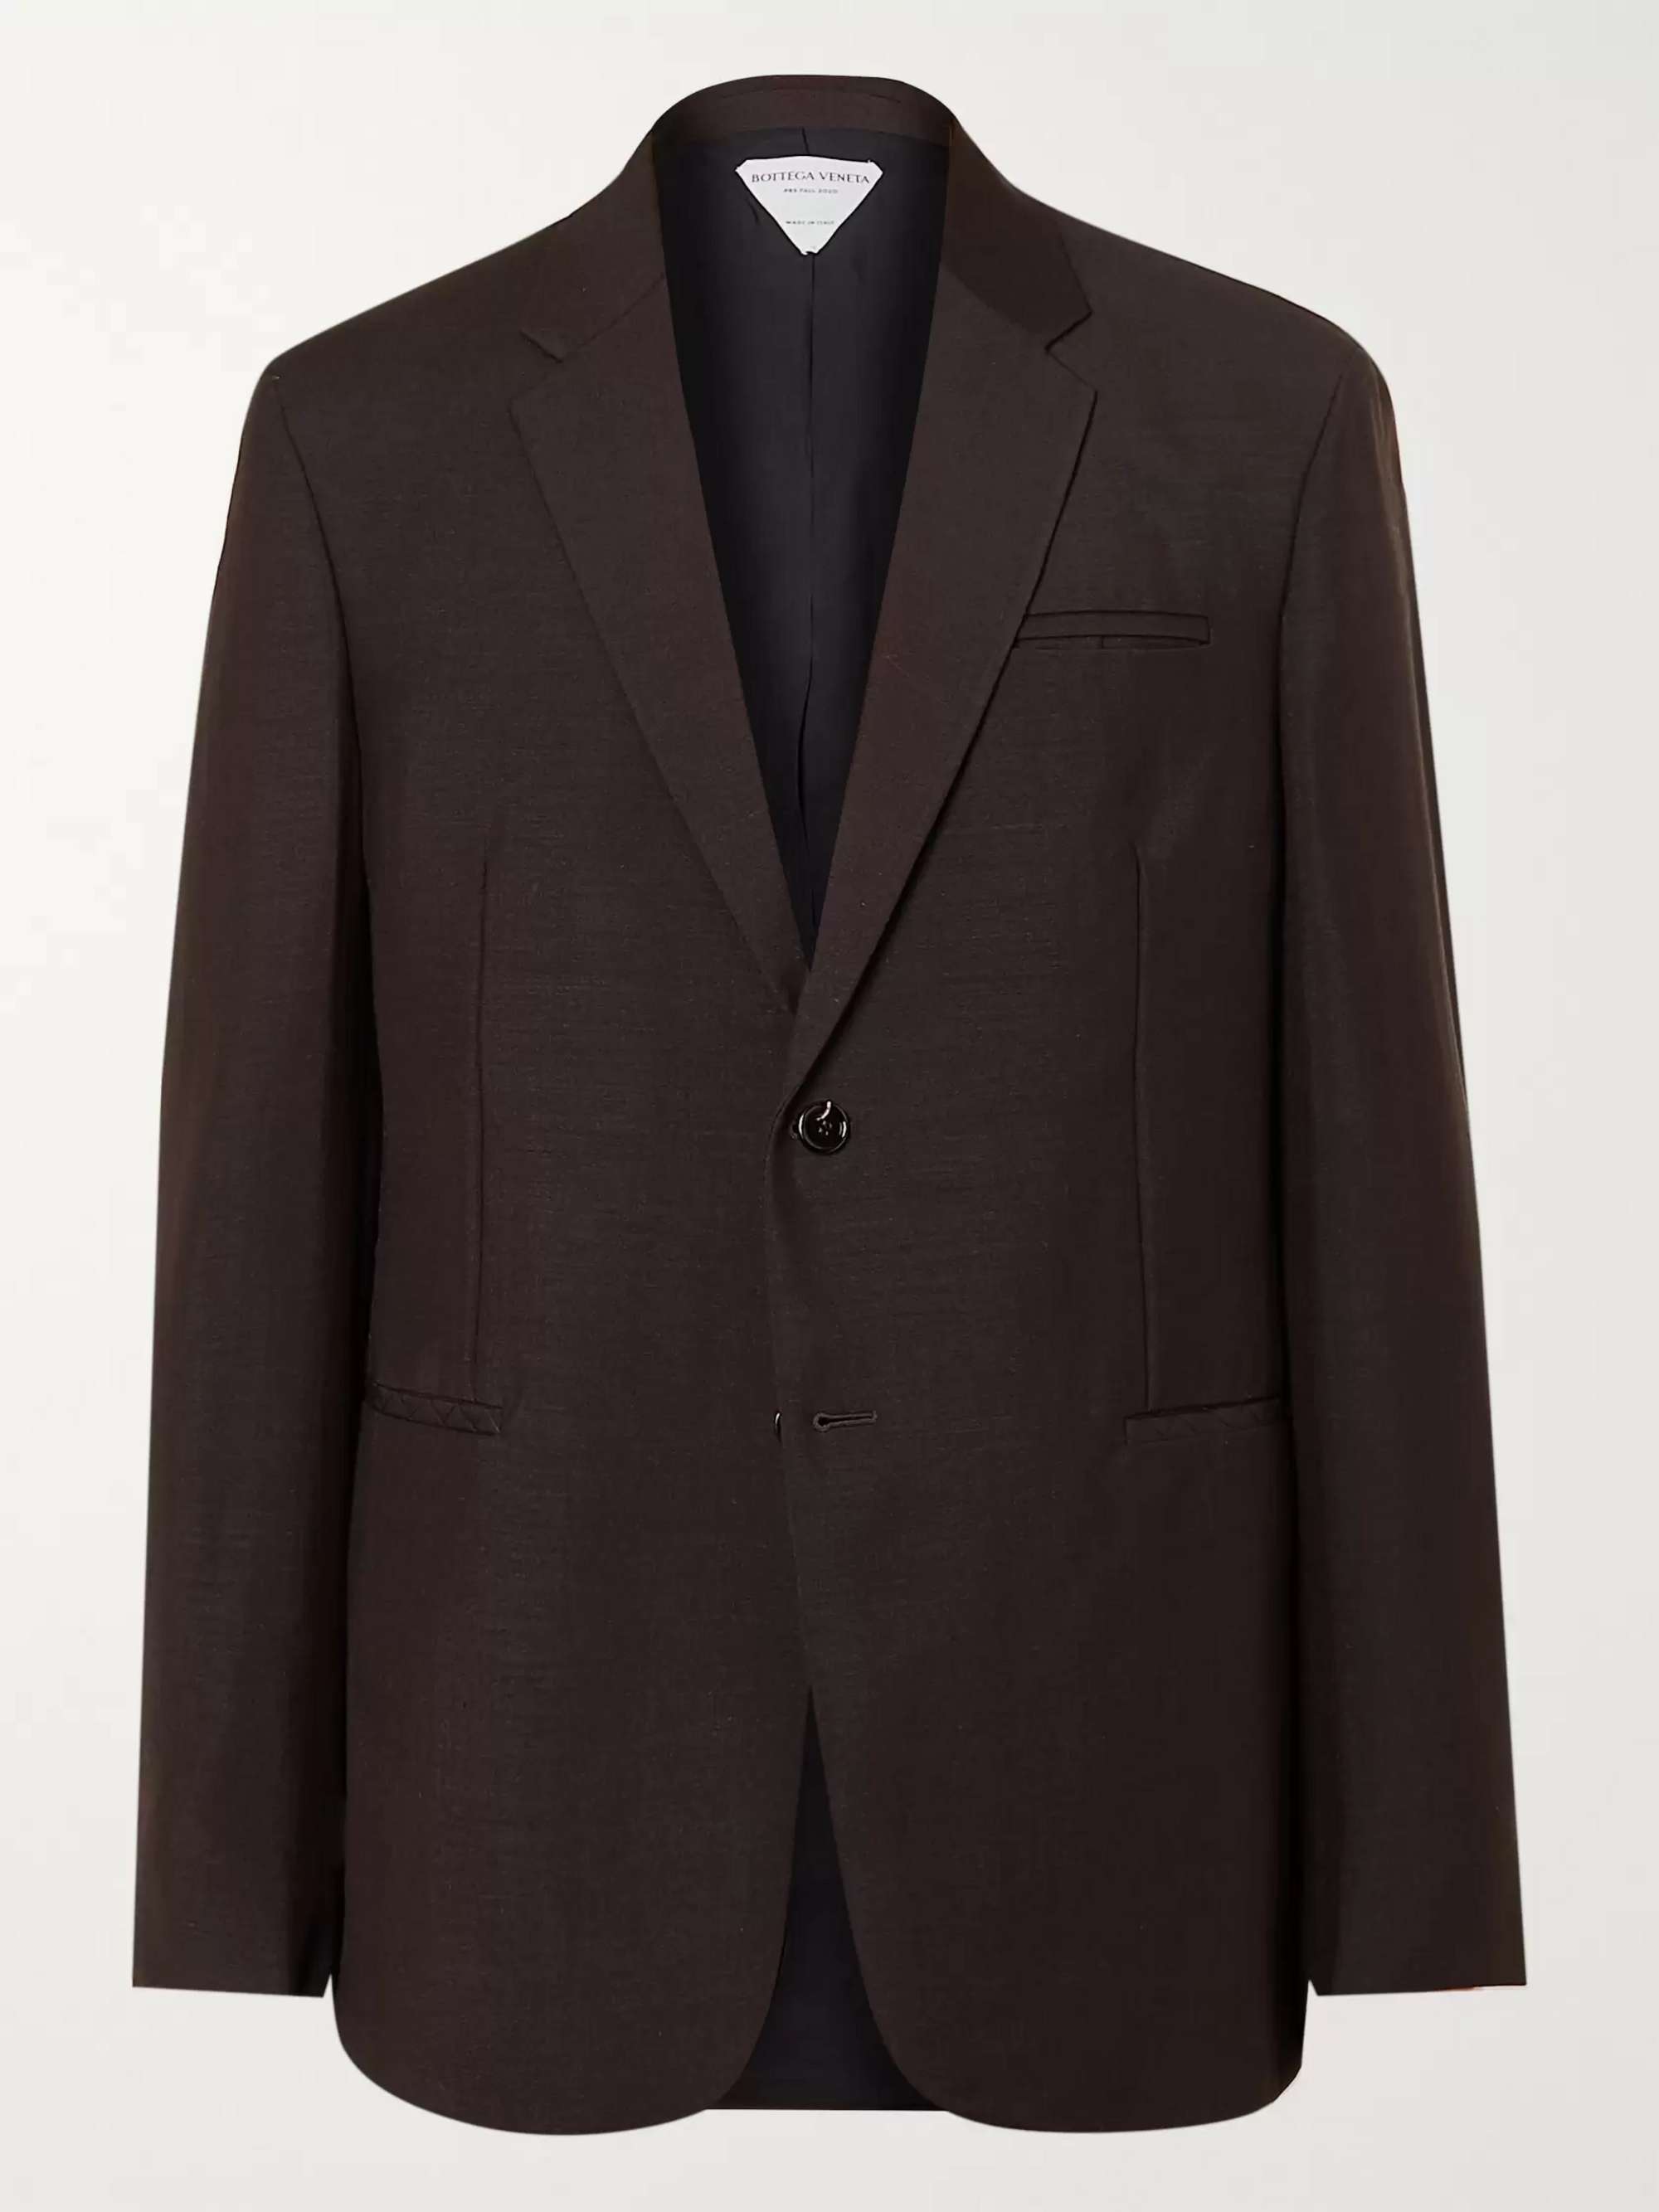 BOTTEGA VENETA Mohair and Wool-Blend Suit Jacket